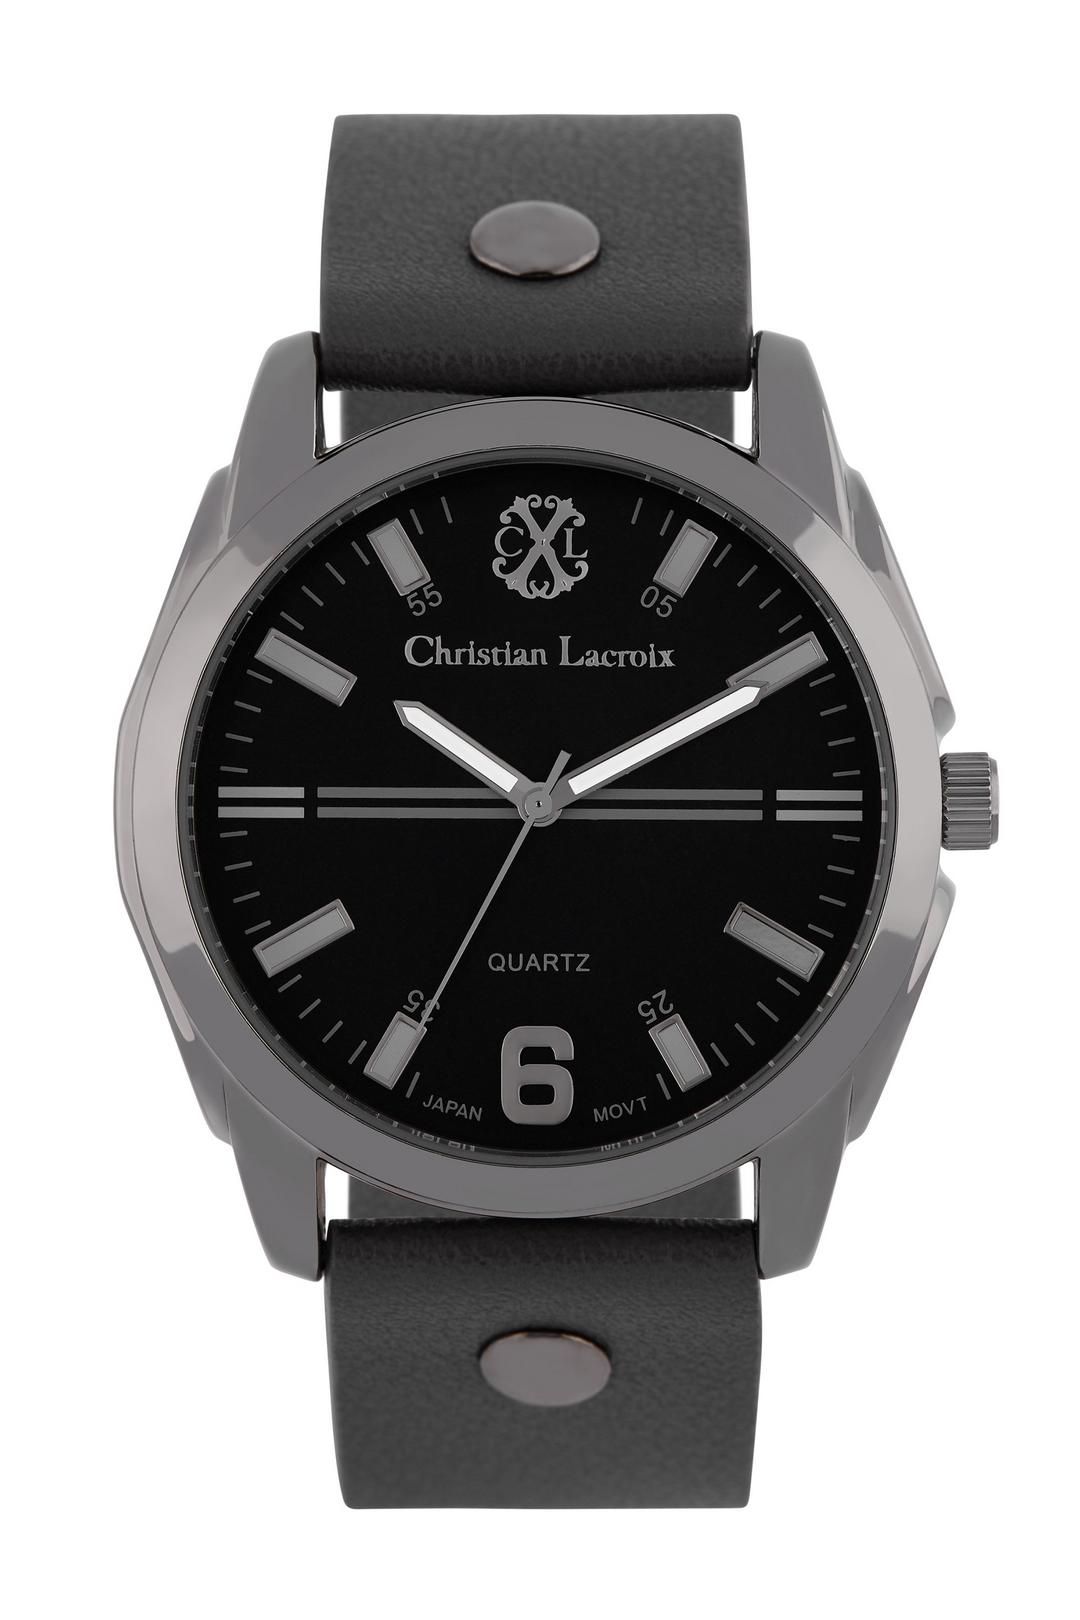 ساعة كريستيان لاكروا للرجال بعرض تناظري بحجم 42 مم - CXLS18039